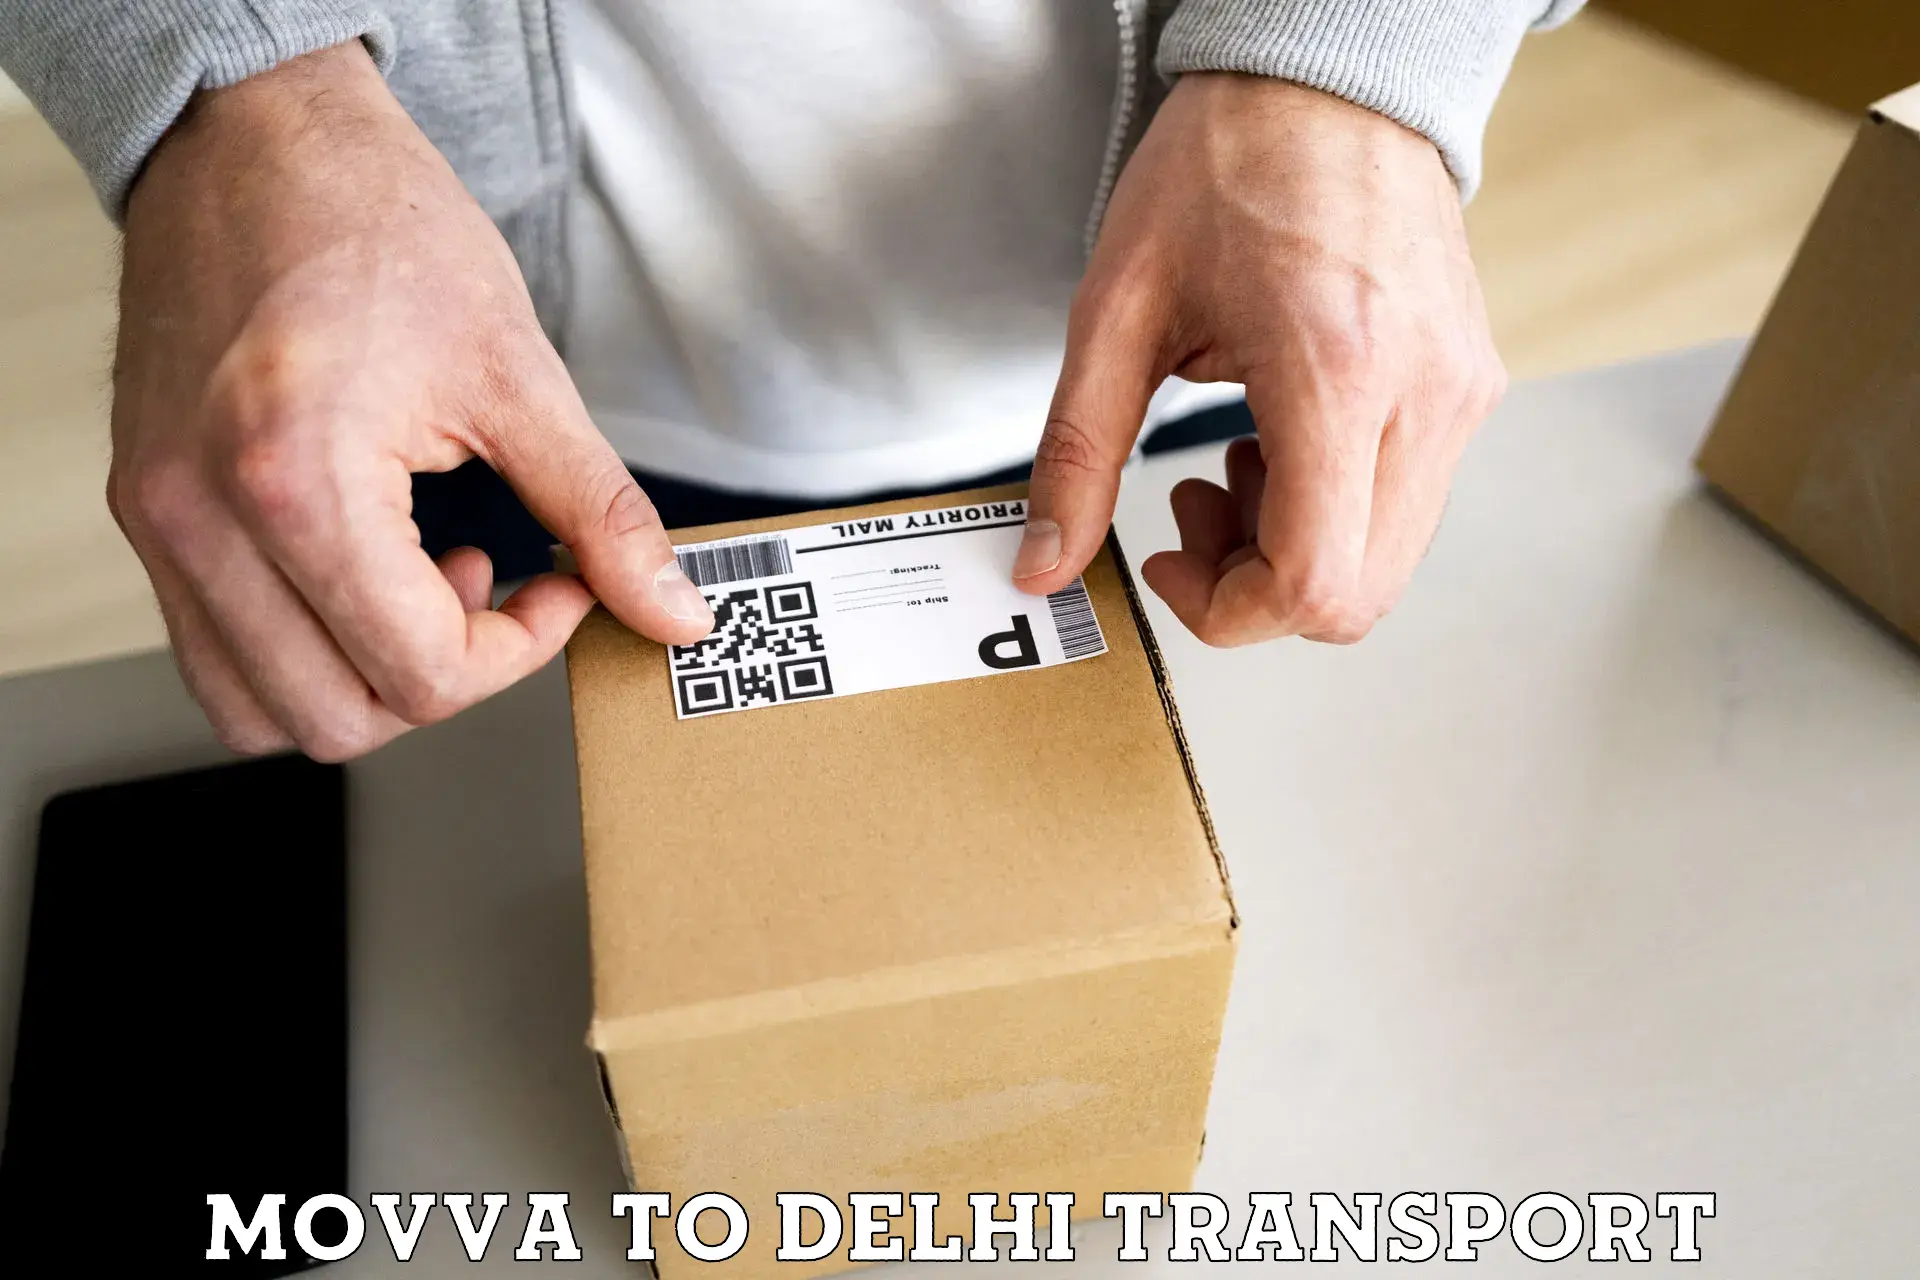 Pick up transport service Movva to East Delhi